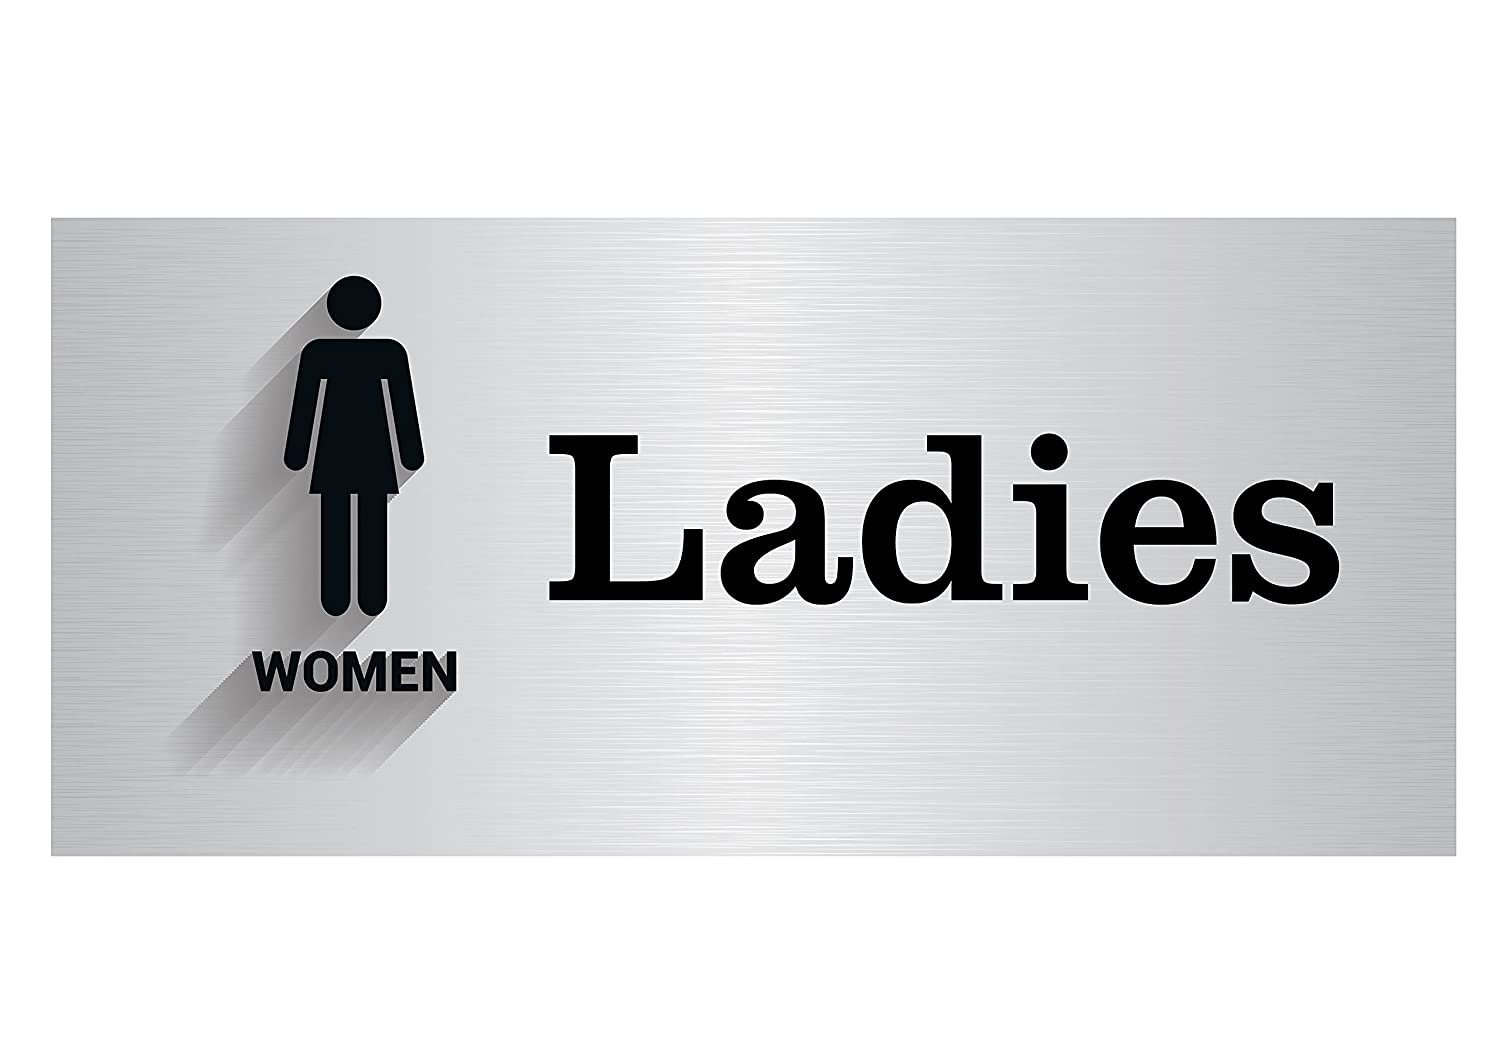 Ladies Toilet Sign Editorial Stock Photo - Stock Image | Shutterstock